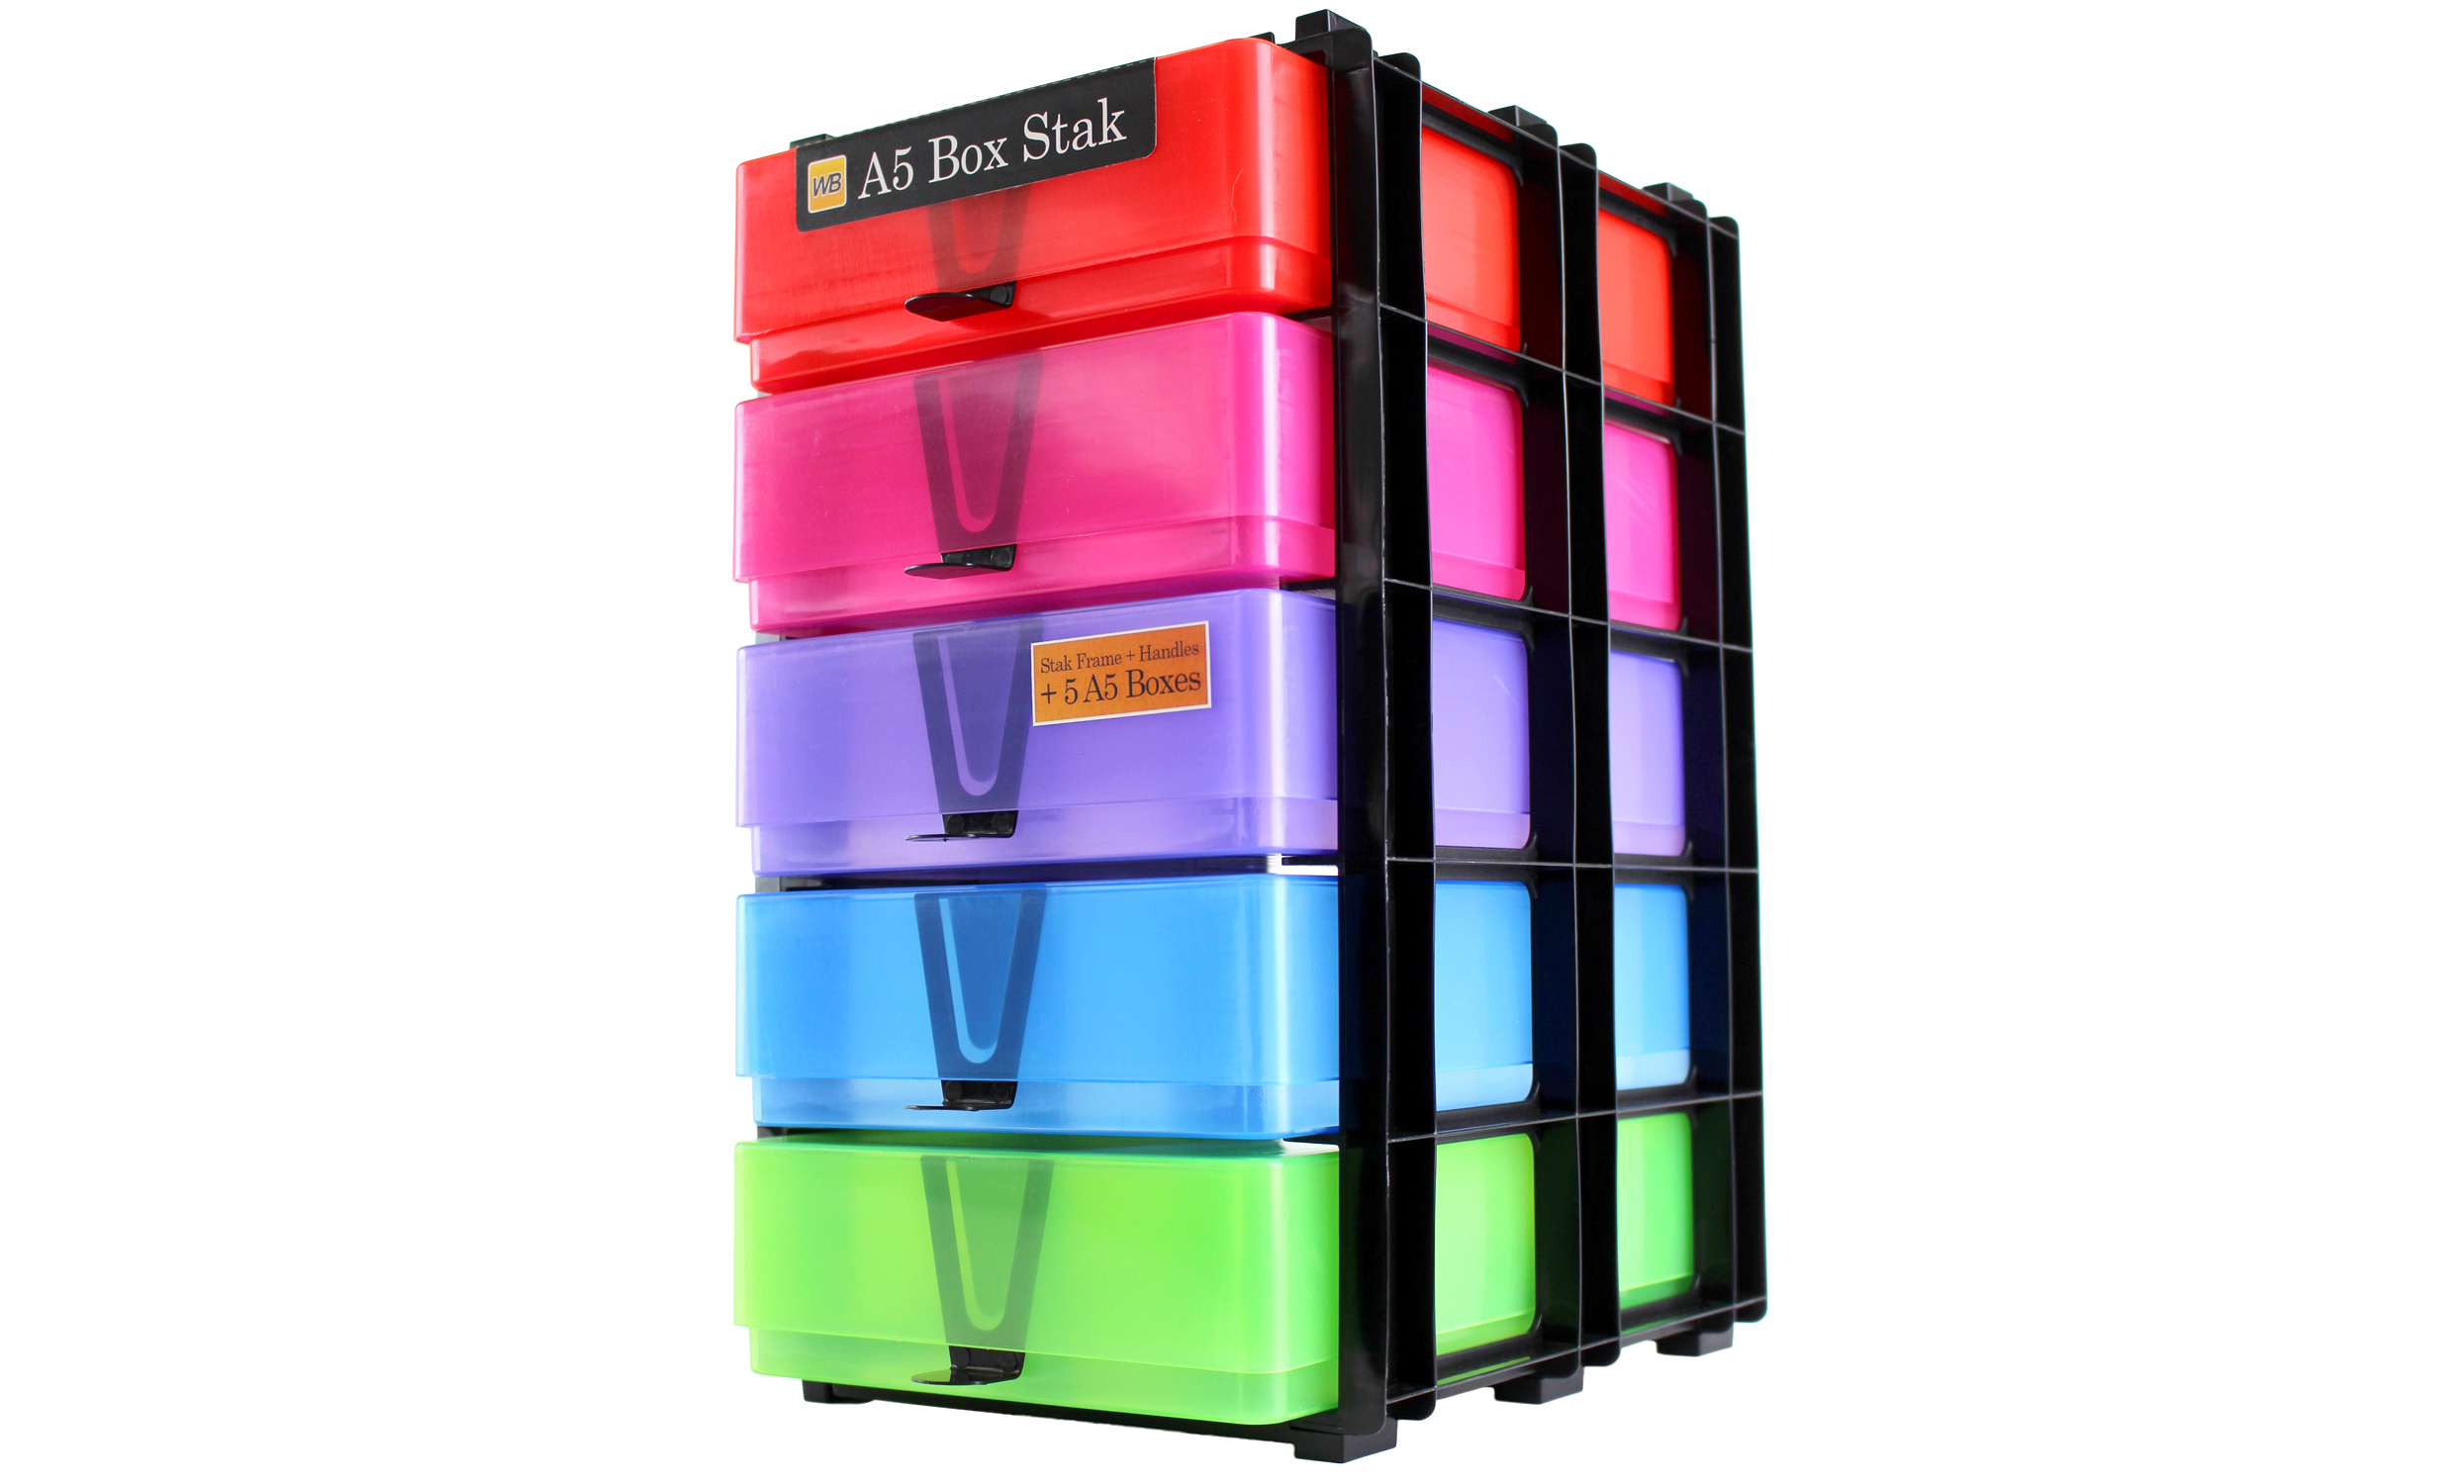 A5 Box Stak Craft Storage Unit, Transparent Boxes - Trade